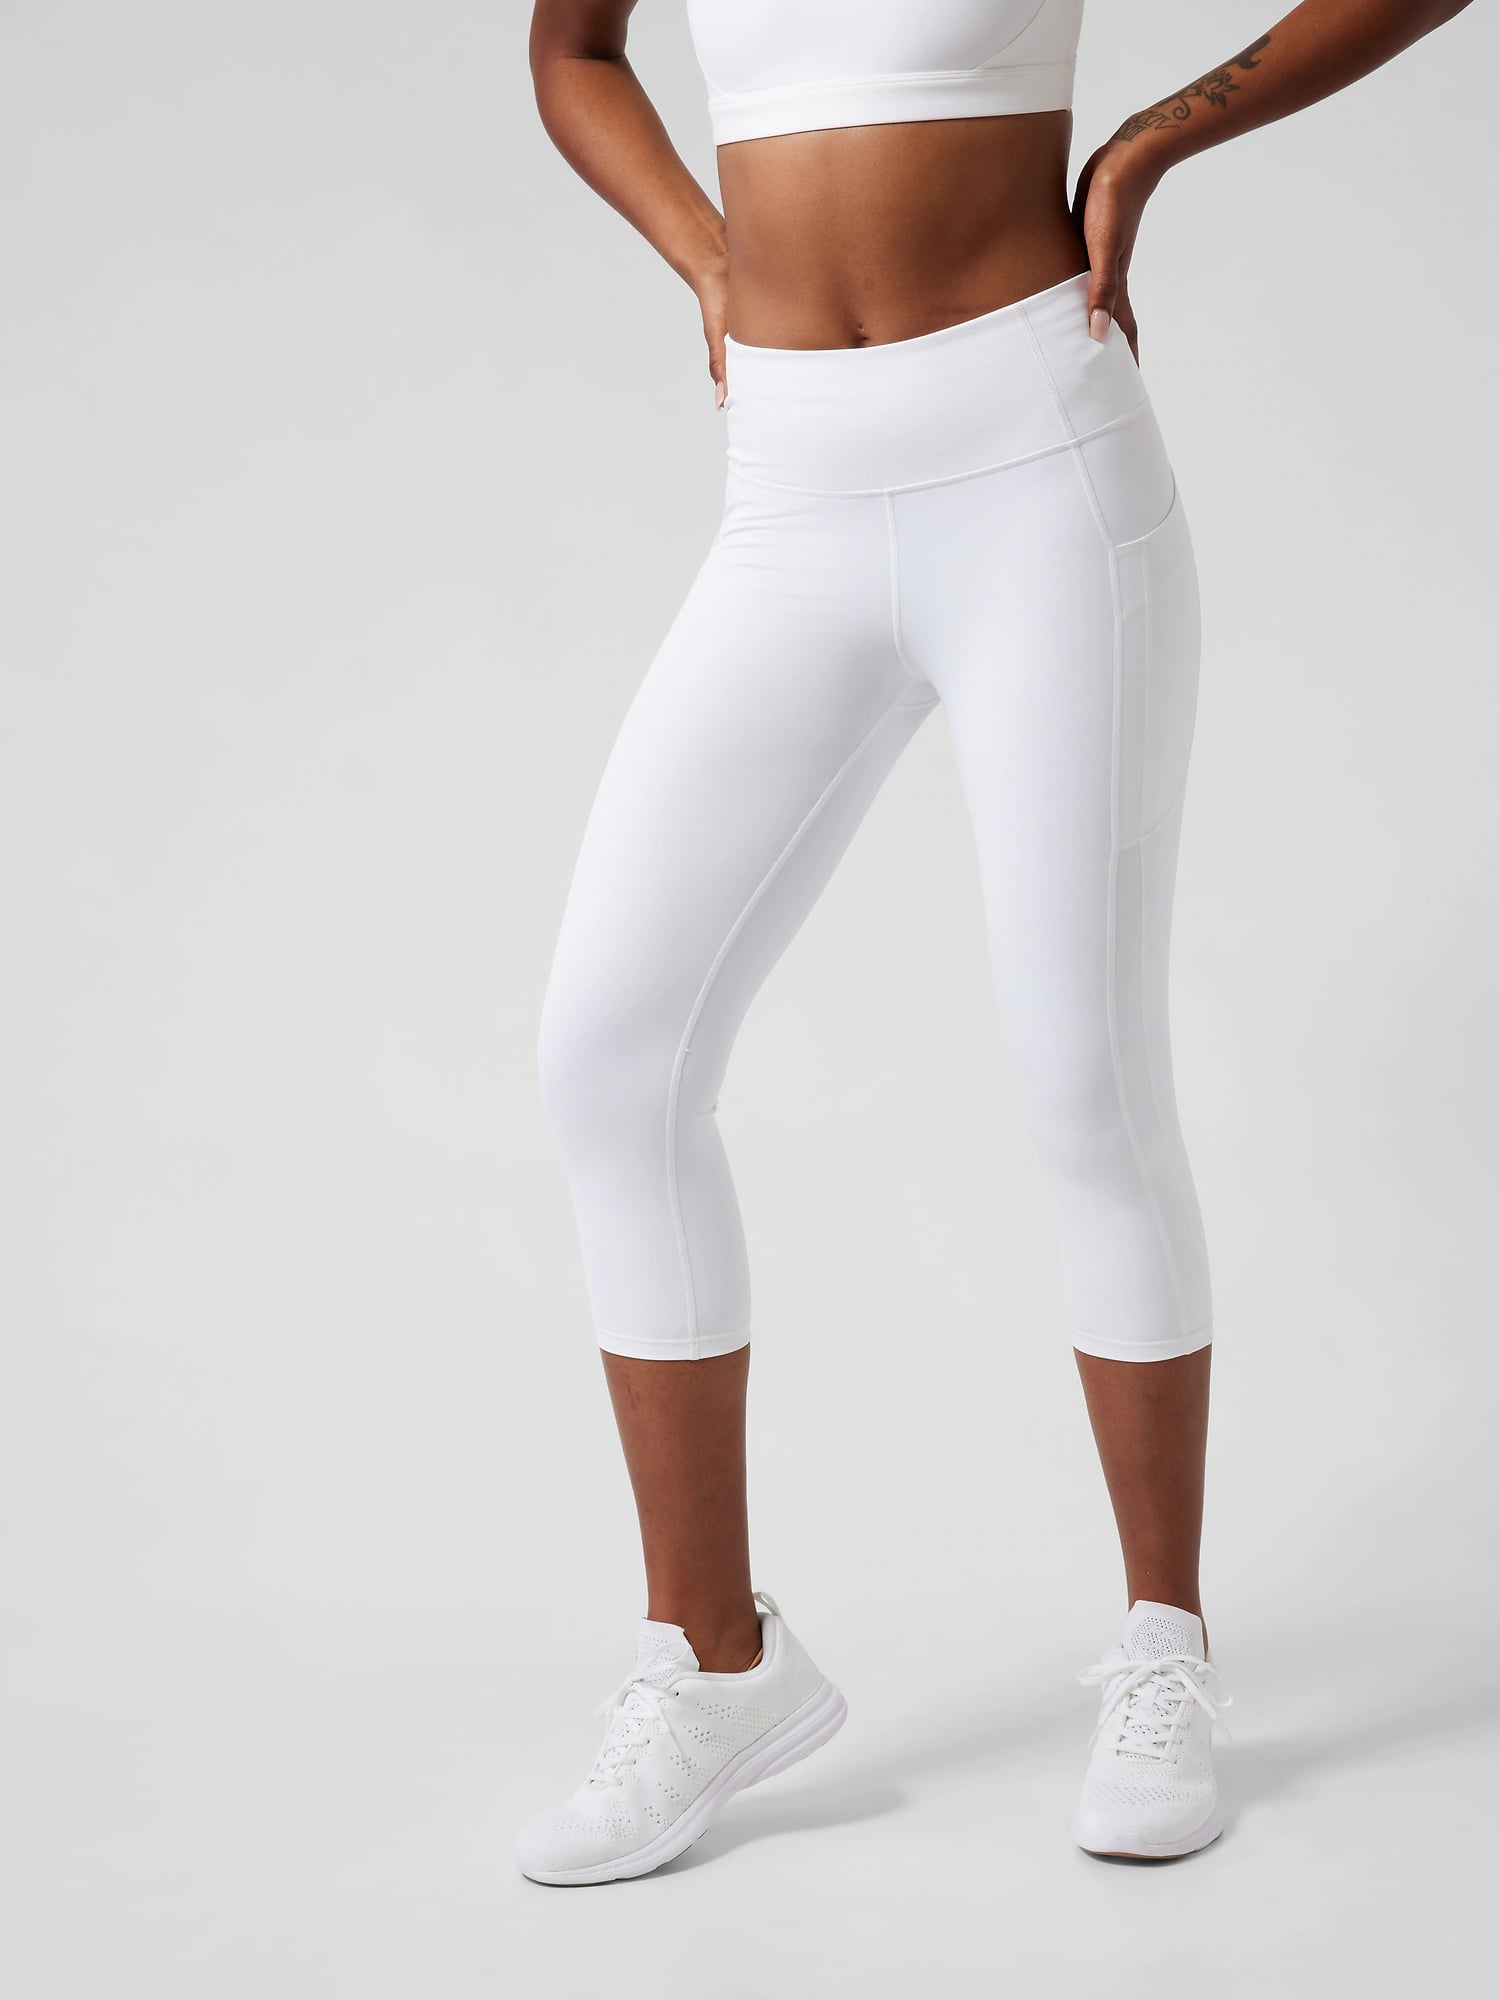 Best 25+ Deals for White Yoga Pants